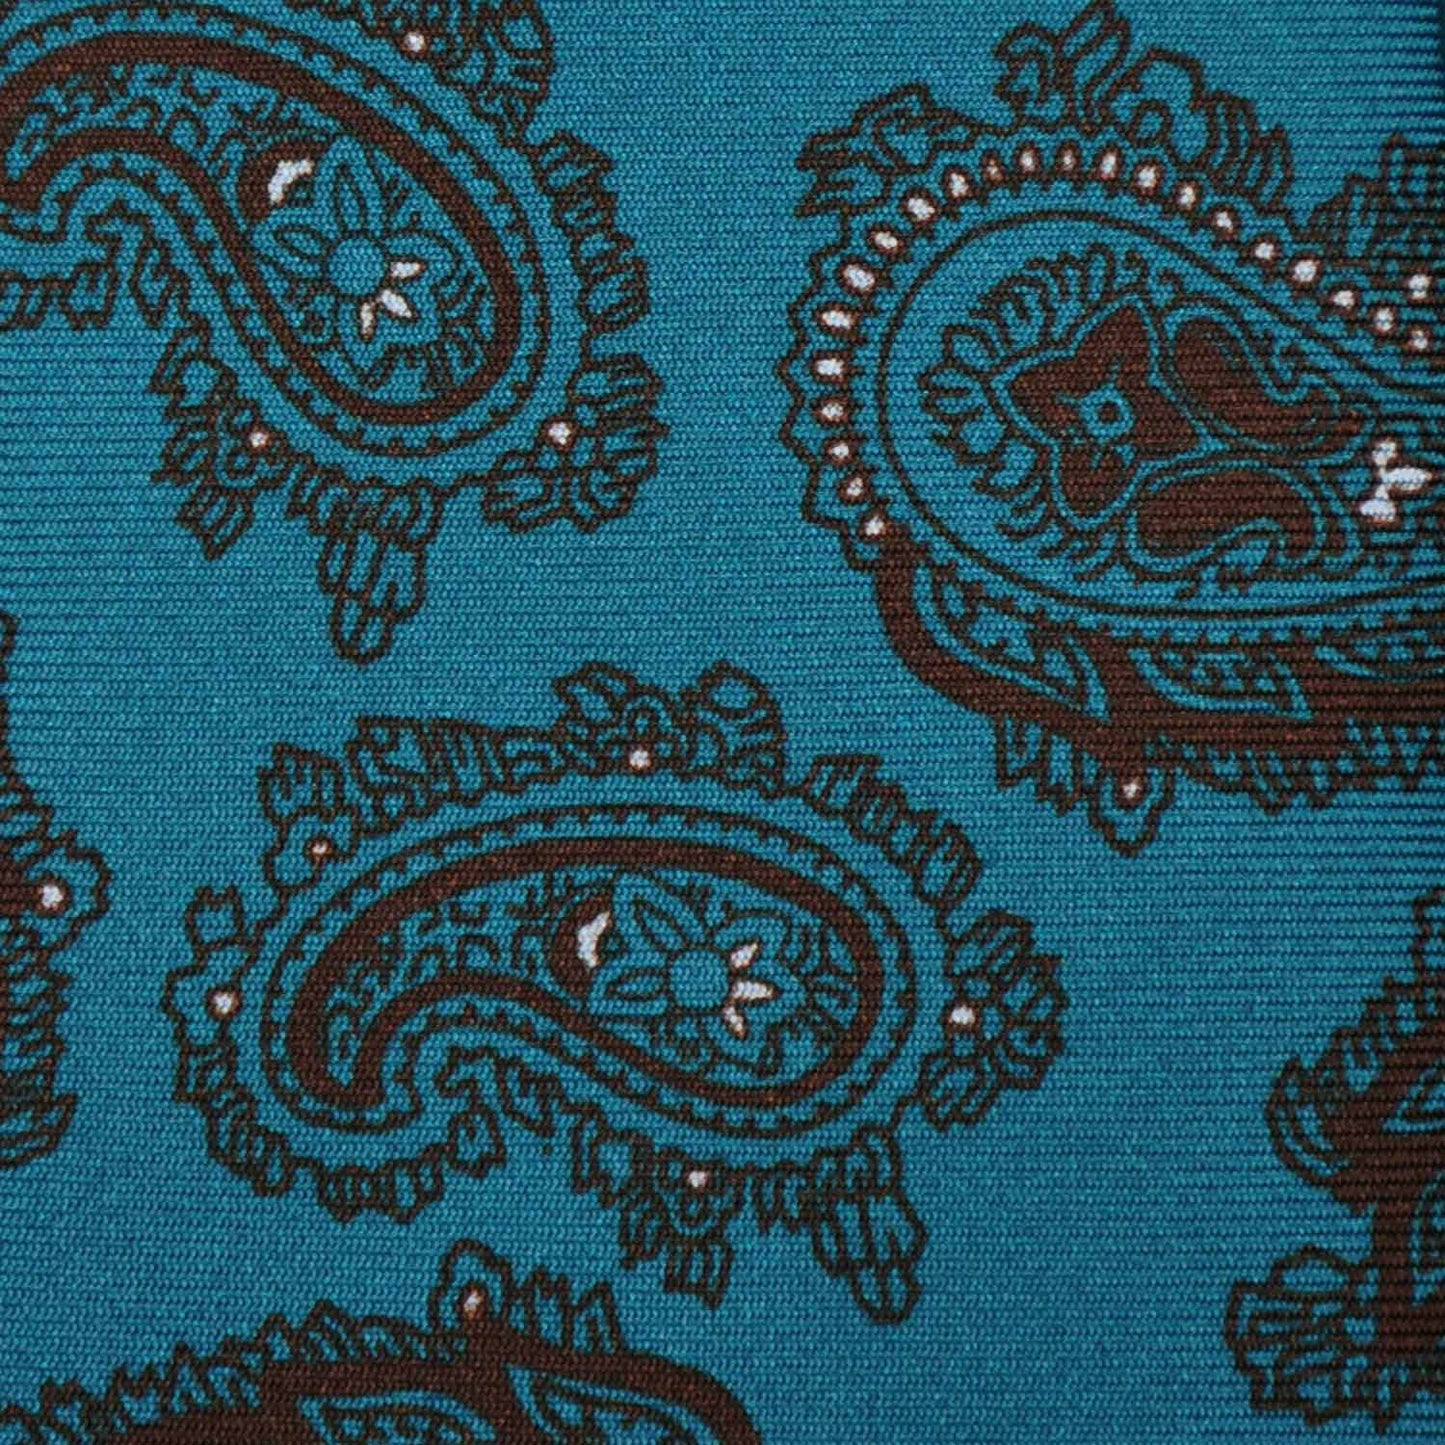 F.Marino Paisley Print Silk Tie 3 Folds Deep Sea Blue-Wools Boutique Uomo